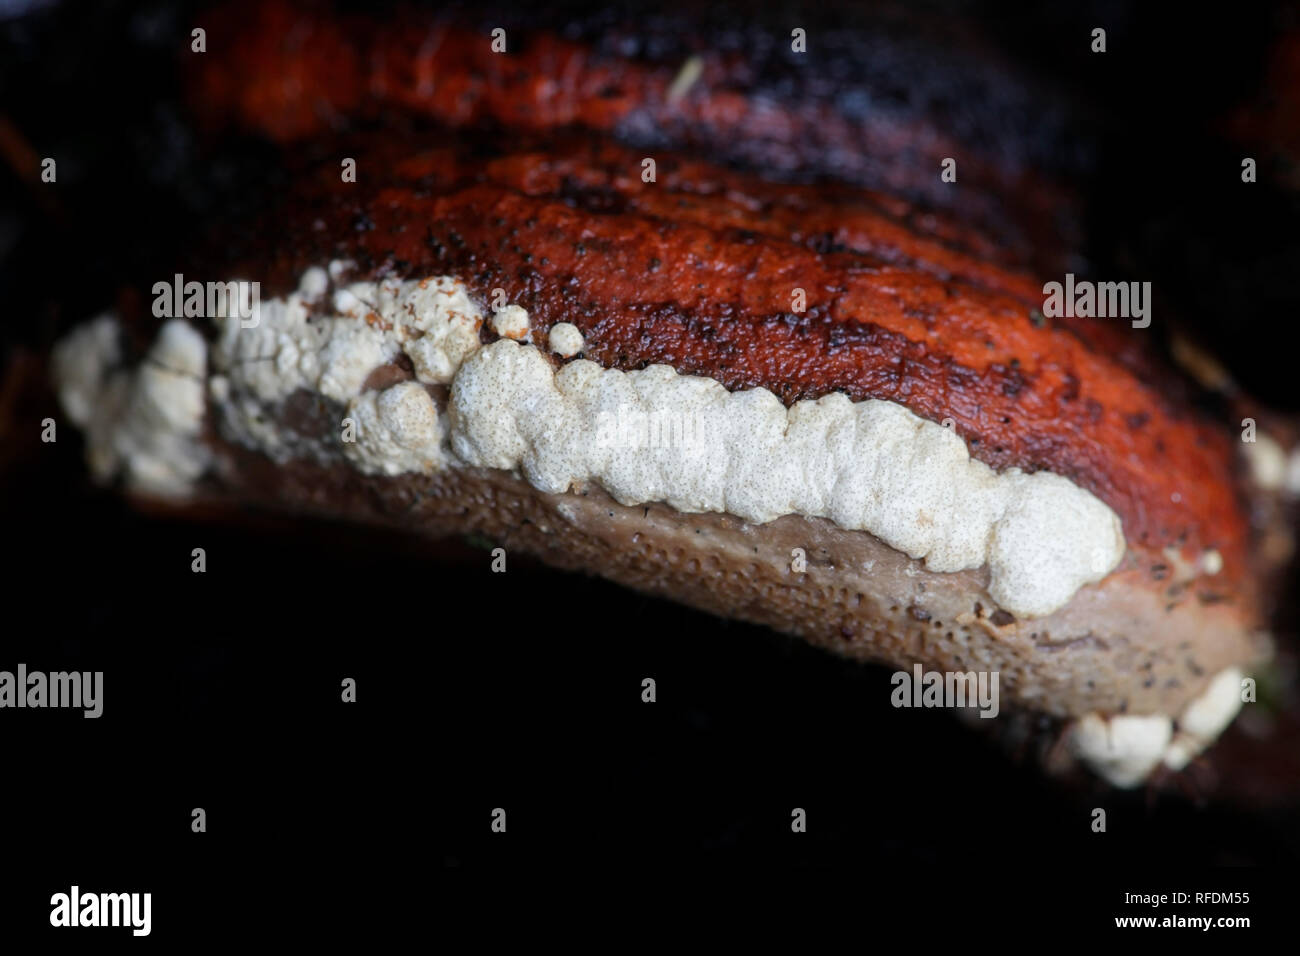 Ochre cushion, Hypocrea pulvinata, growing as a parasite on red belt conk, Fomitopsis pinicola. Stock Photo